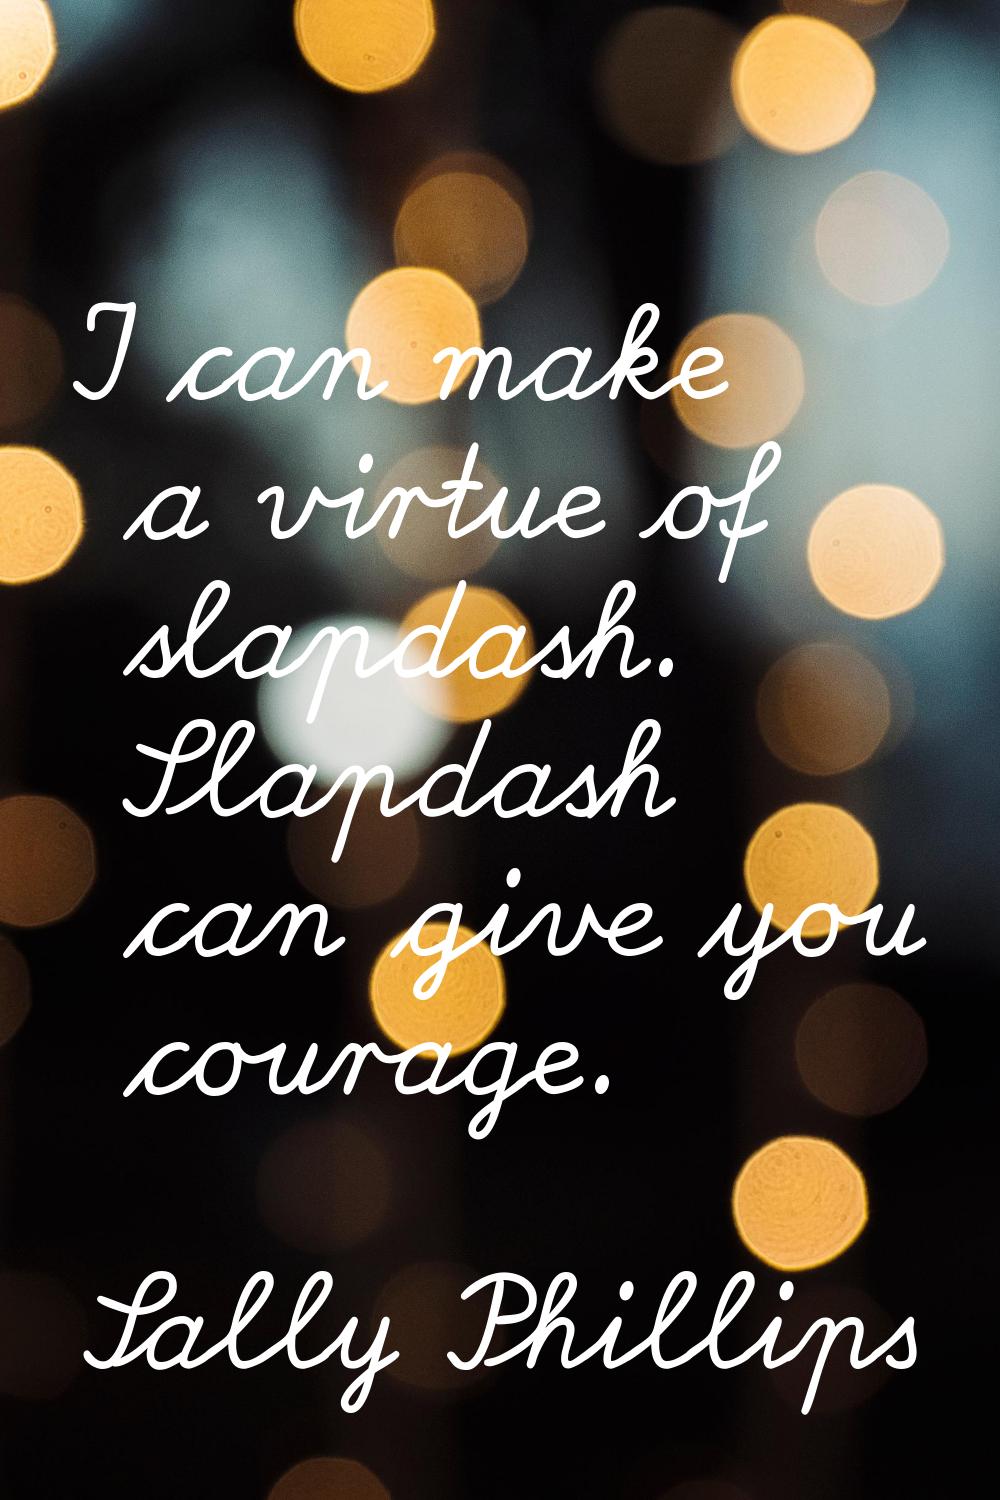 I can make a virtue of slapdash. Slapdash can give you courage.